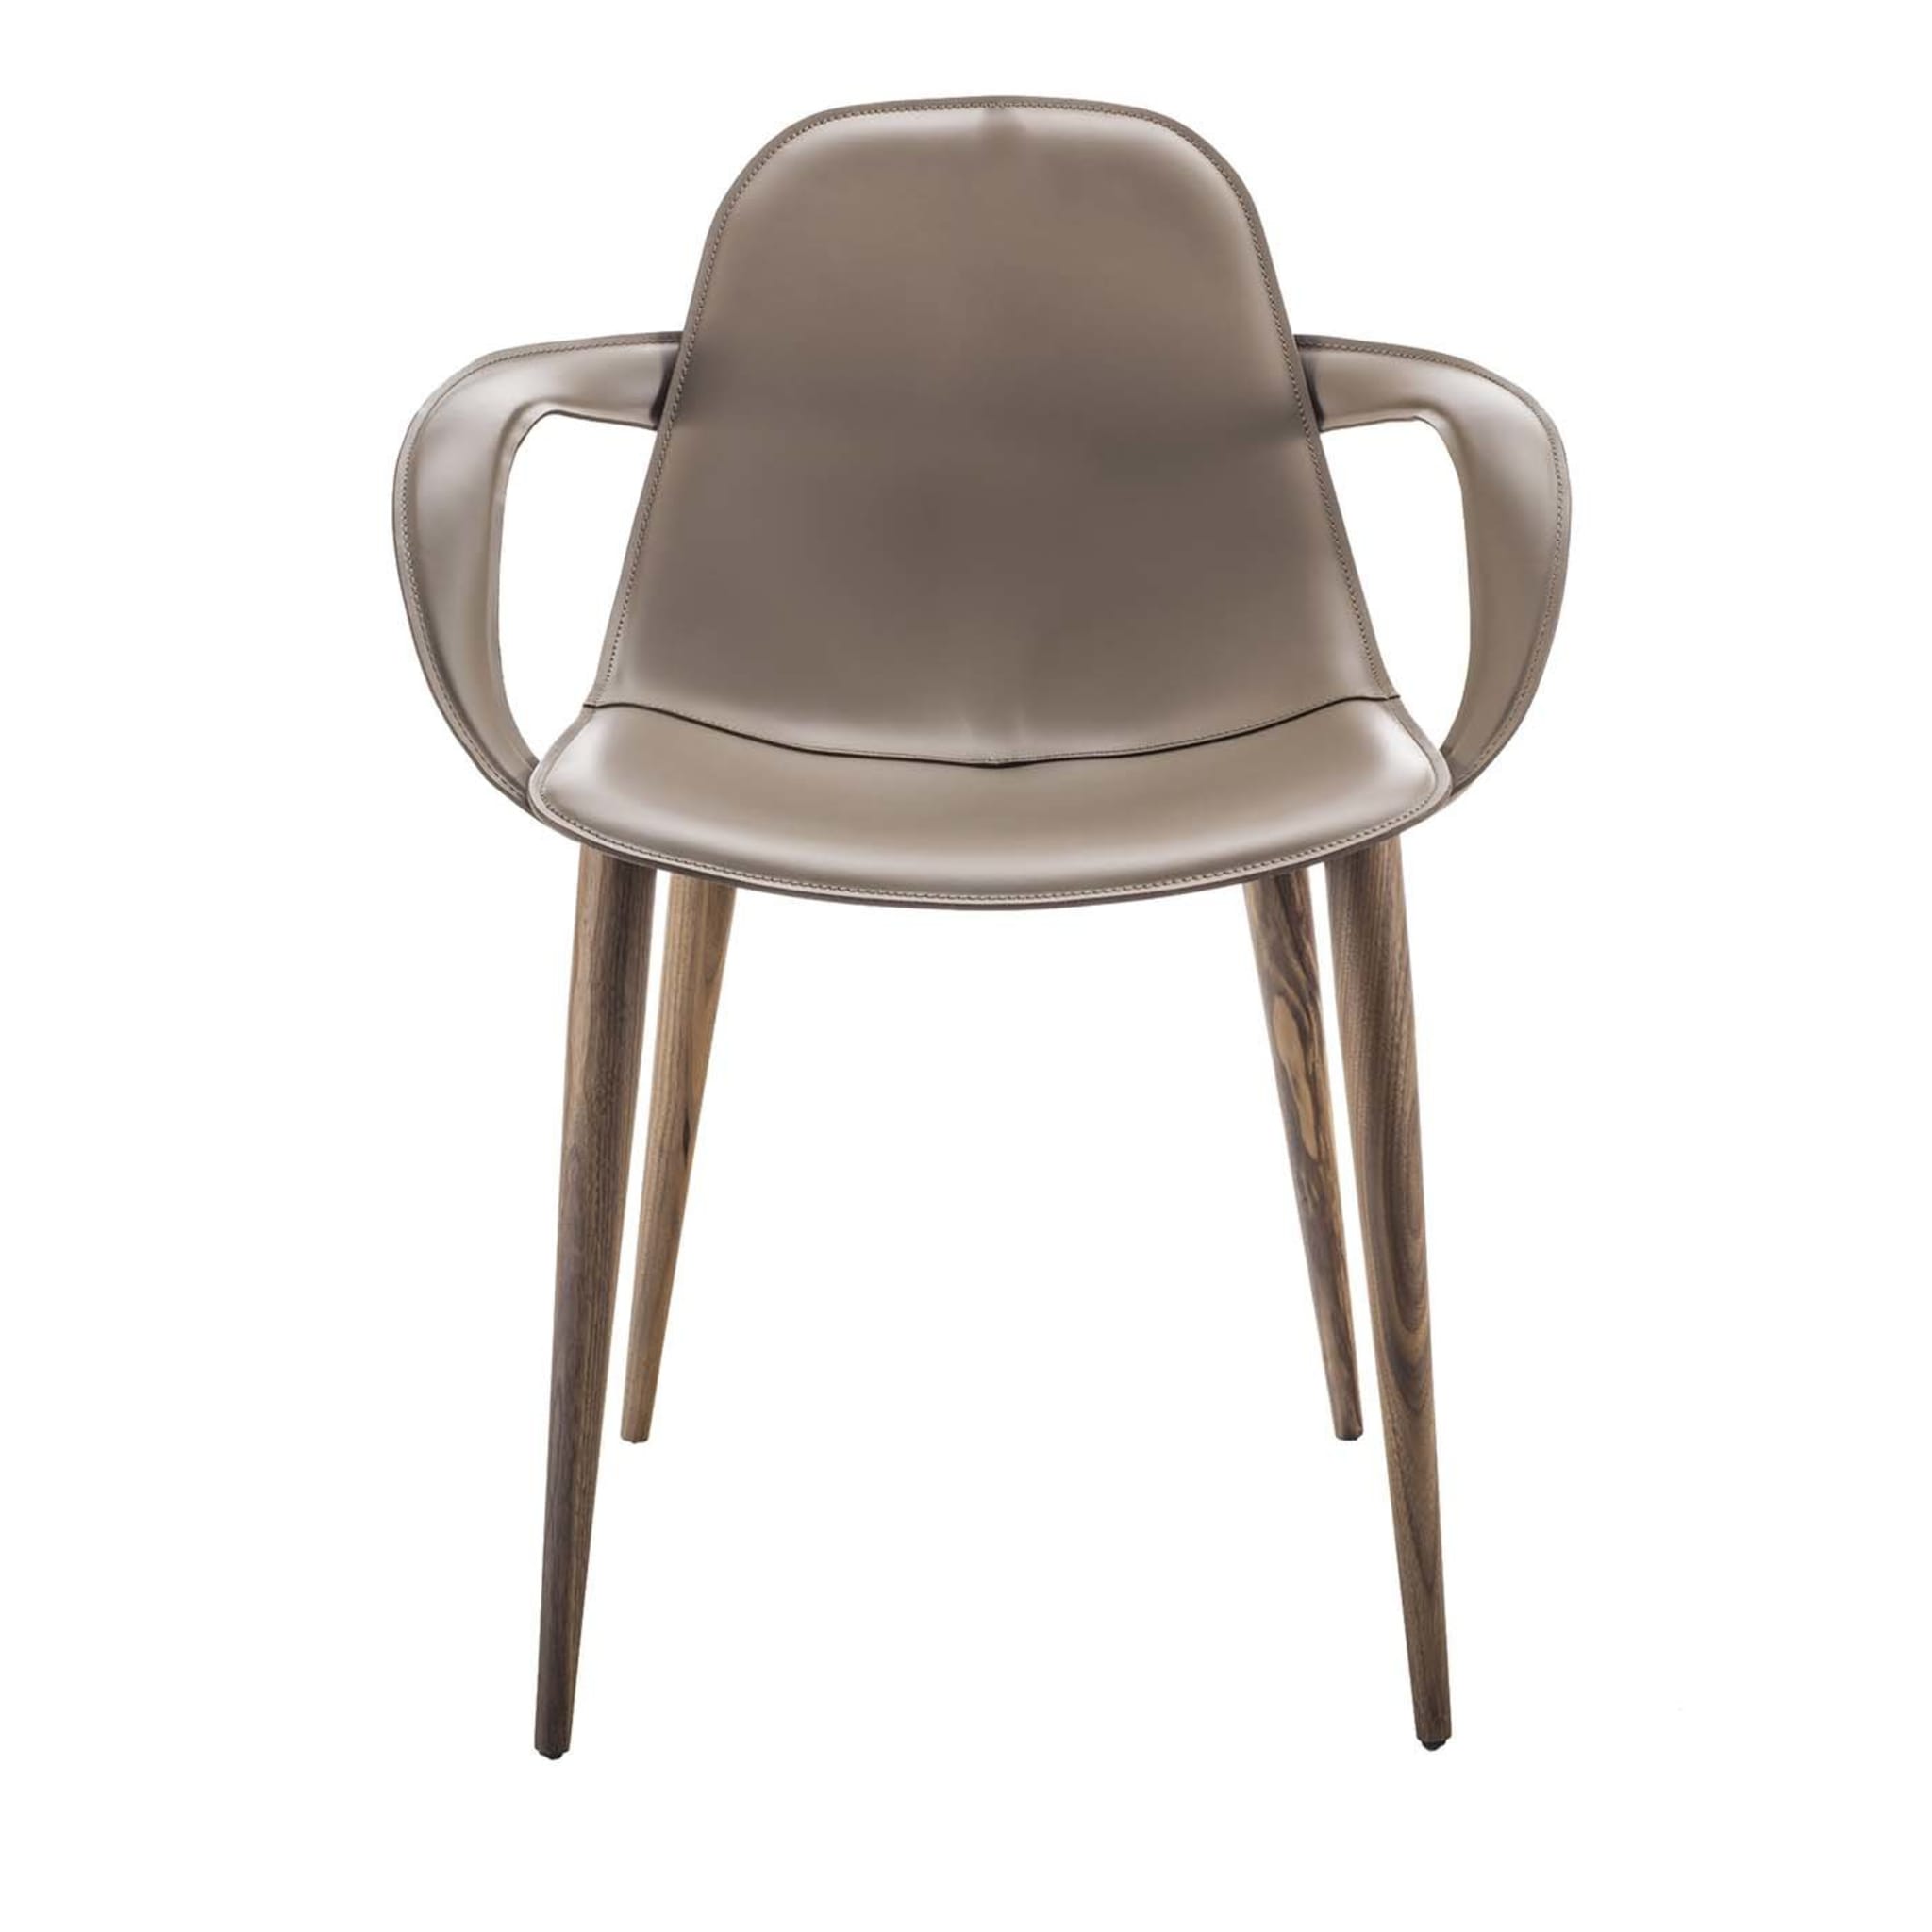 Couture Wooden-Legged Chair by Stefano Bigi - Main view